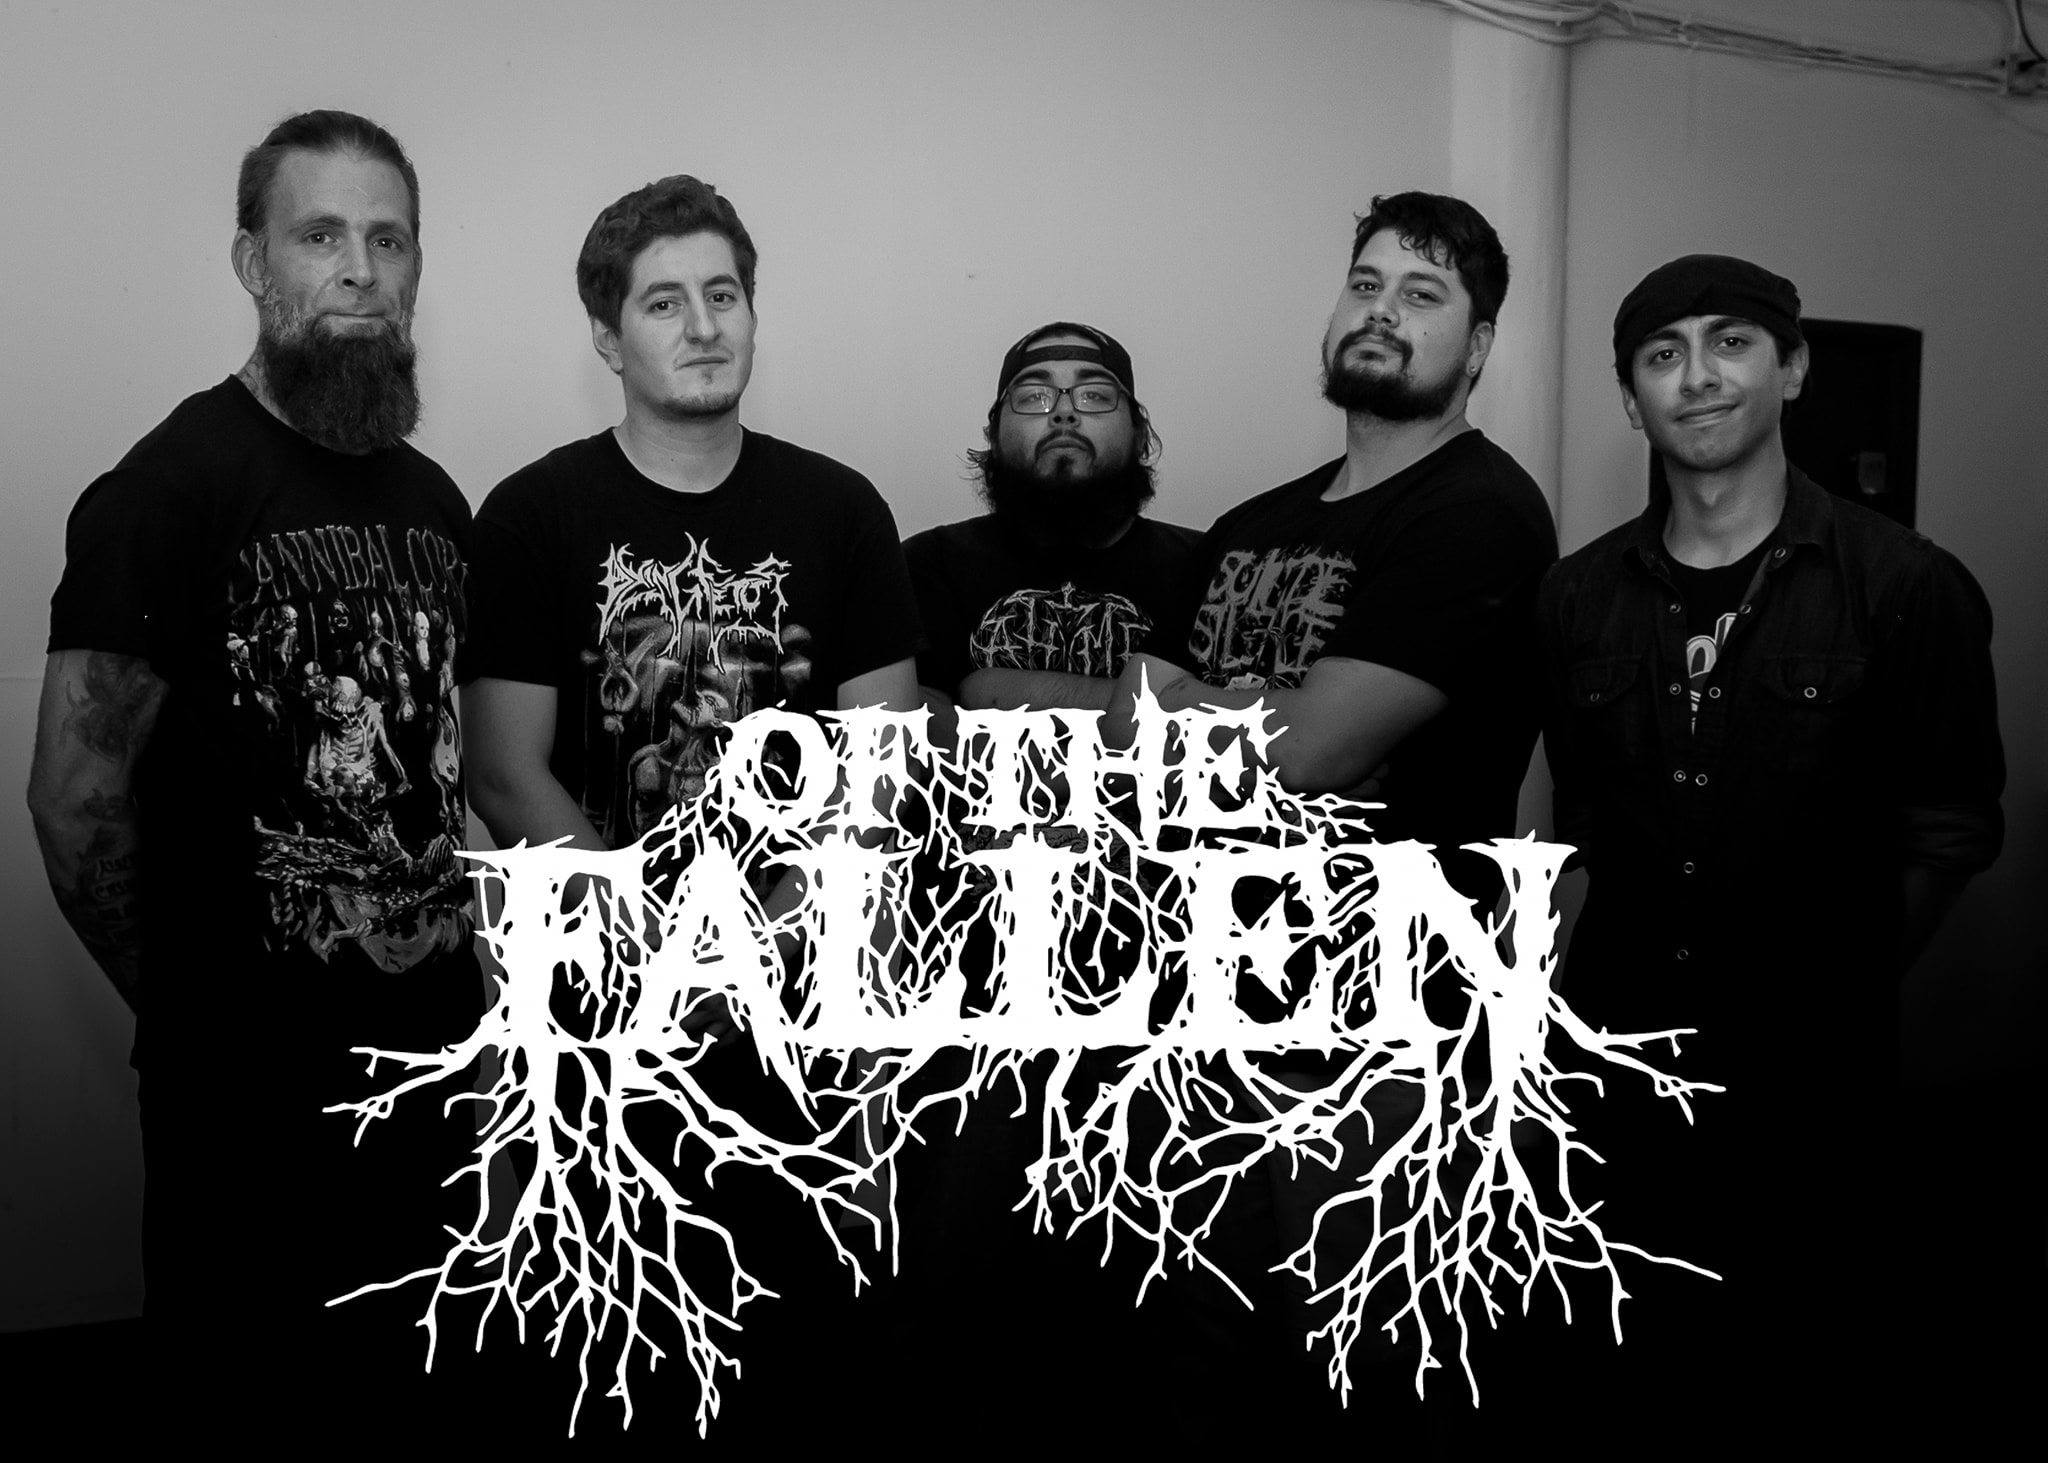 Lamentation группа. Fallen. Carcass Band. Lamentation Band. Fallen fall collection